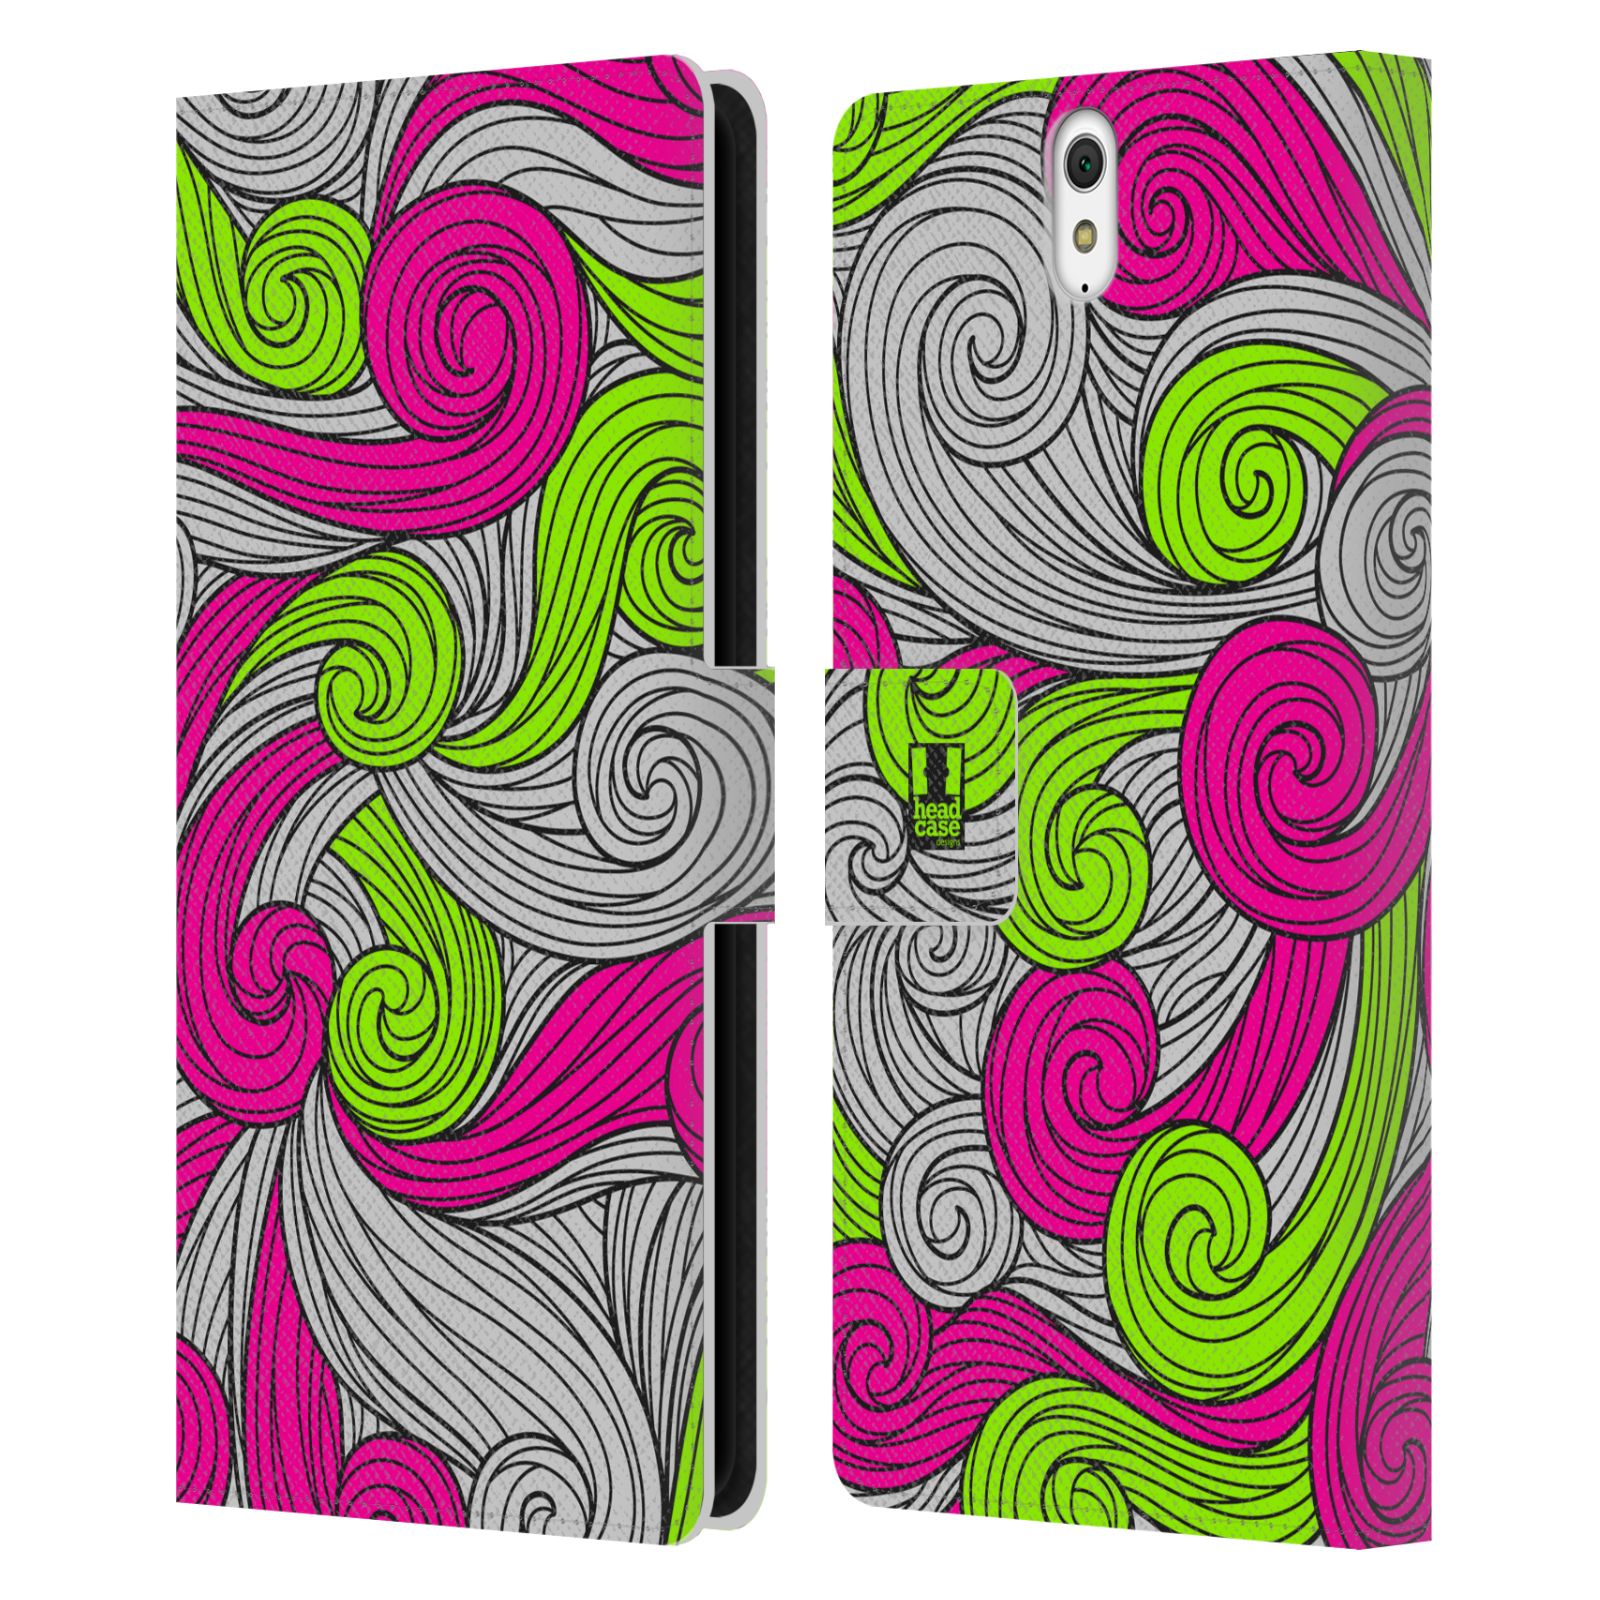 HEAD CASE Flipové pouzdro pro mobil SONY XPERIA C5 Ultra barevné vlny zářivě růžová a zelená